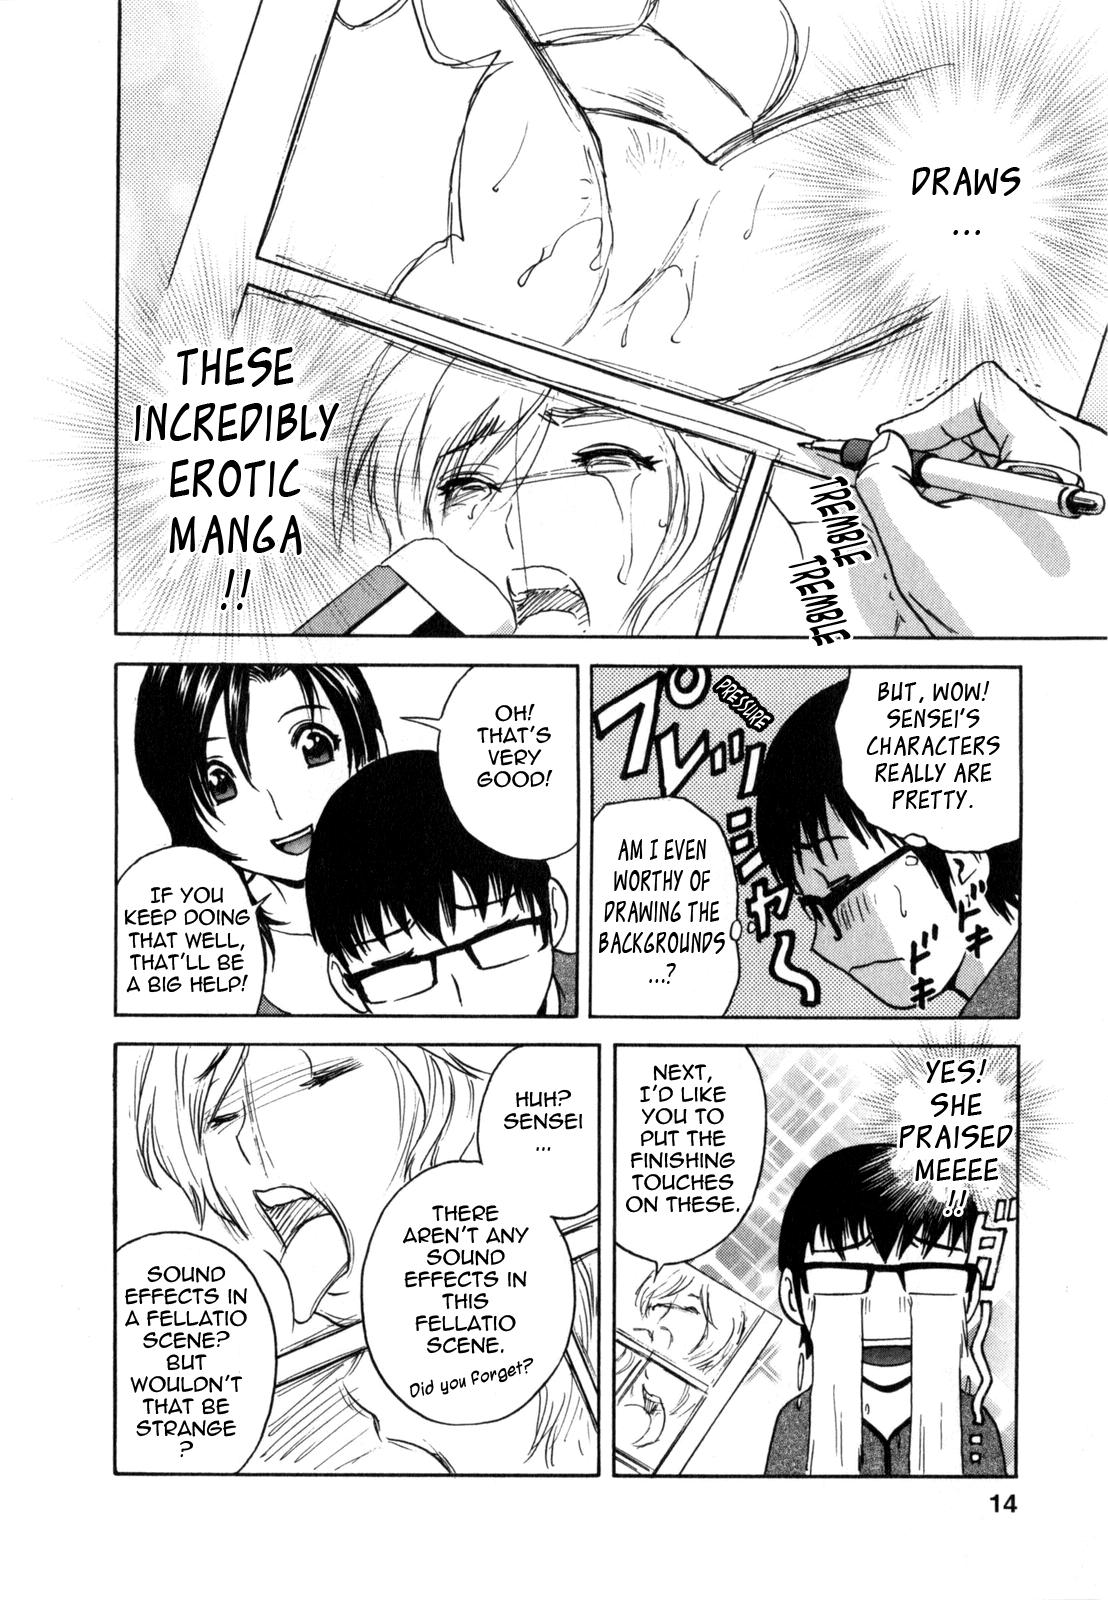 [Hidemaru] Life with Married Women Just Like a Manga 1 - Ch. 1-5 [English] {Tadanohito} 14